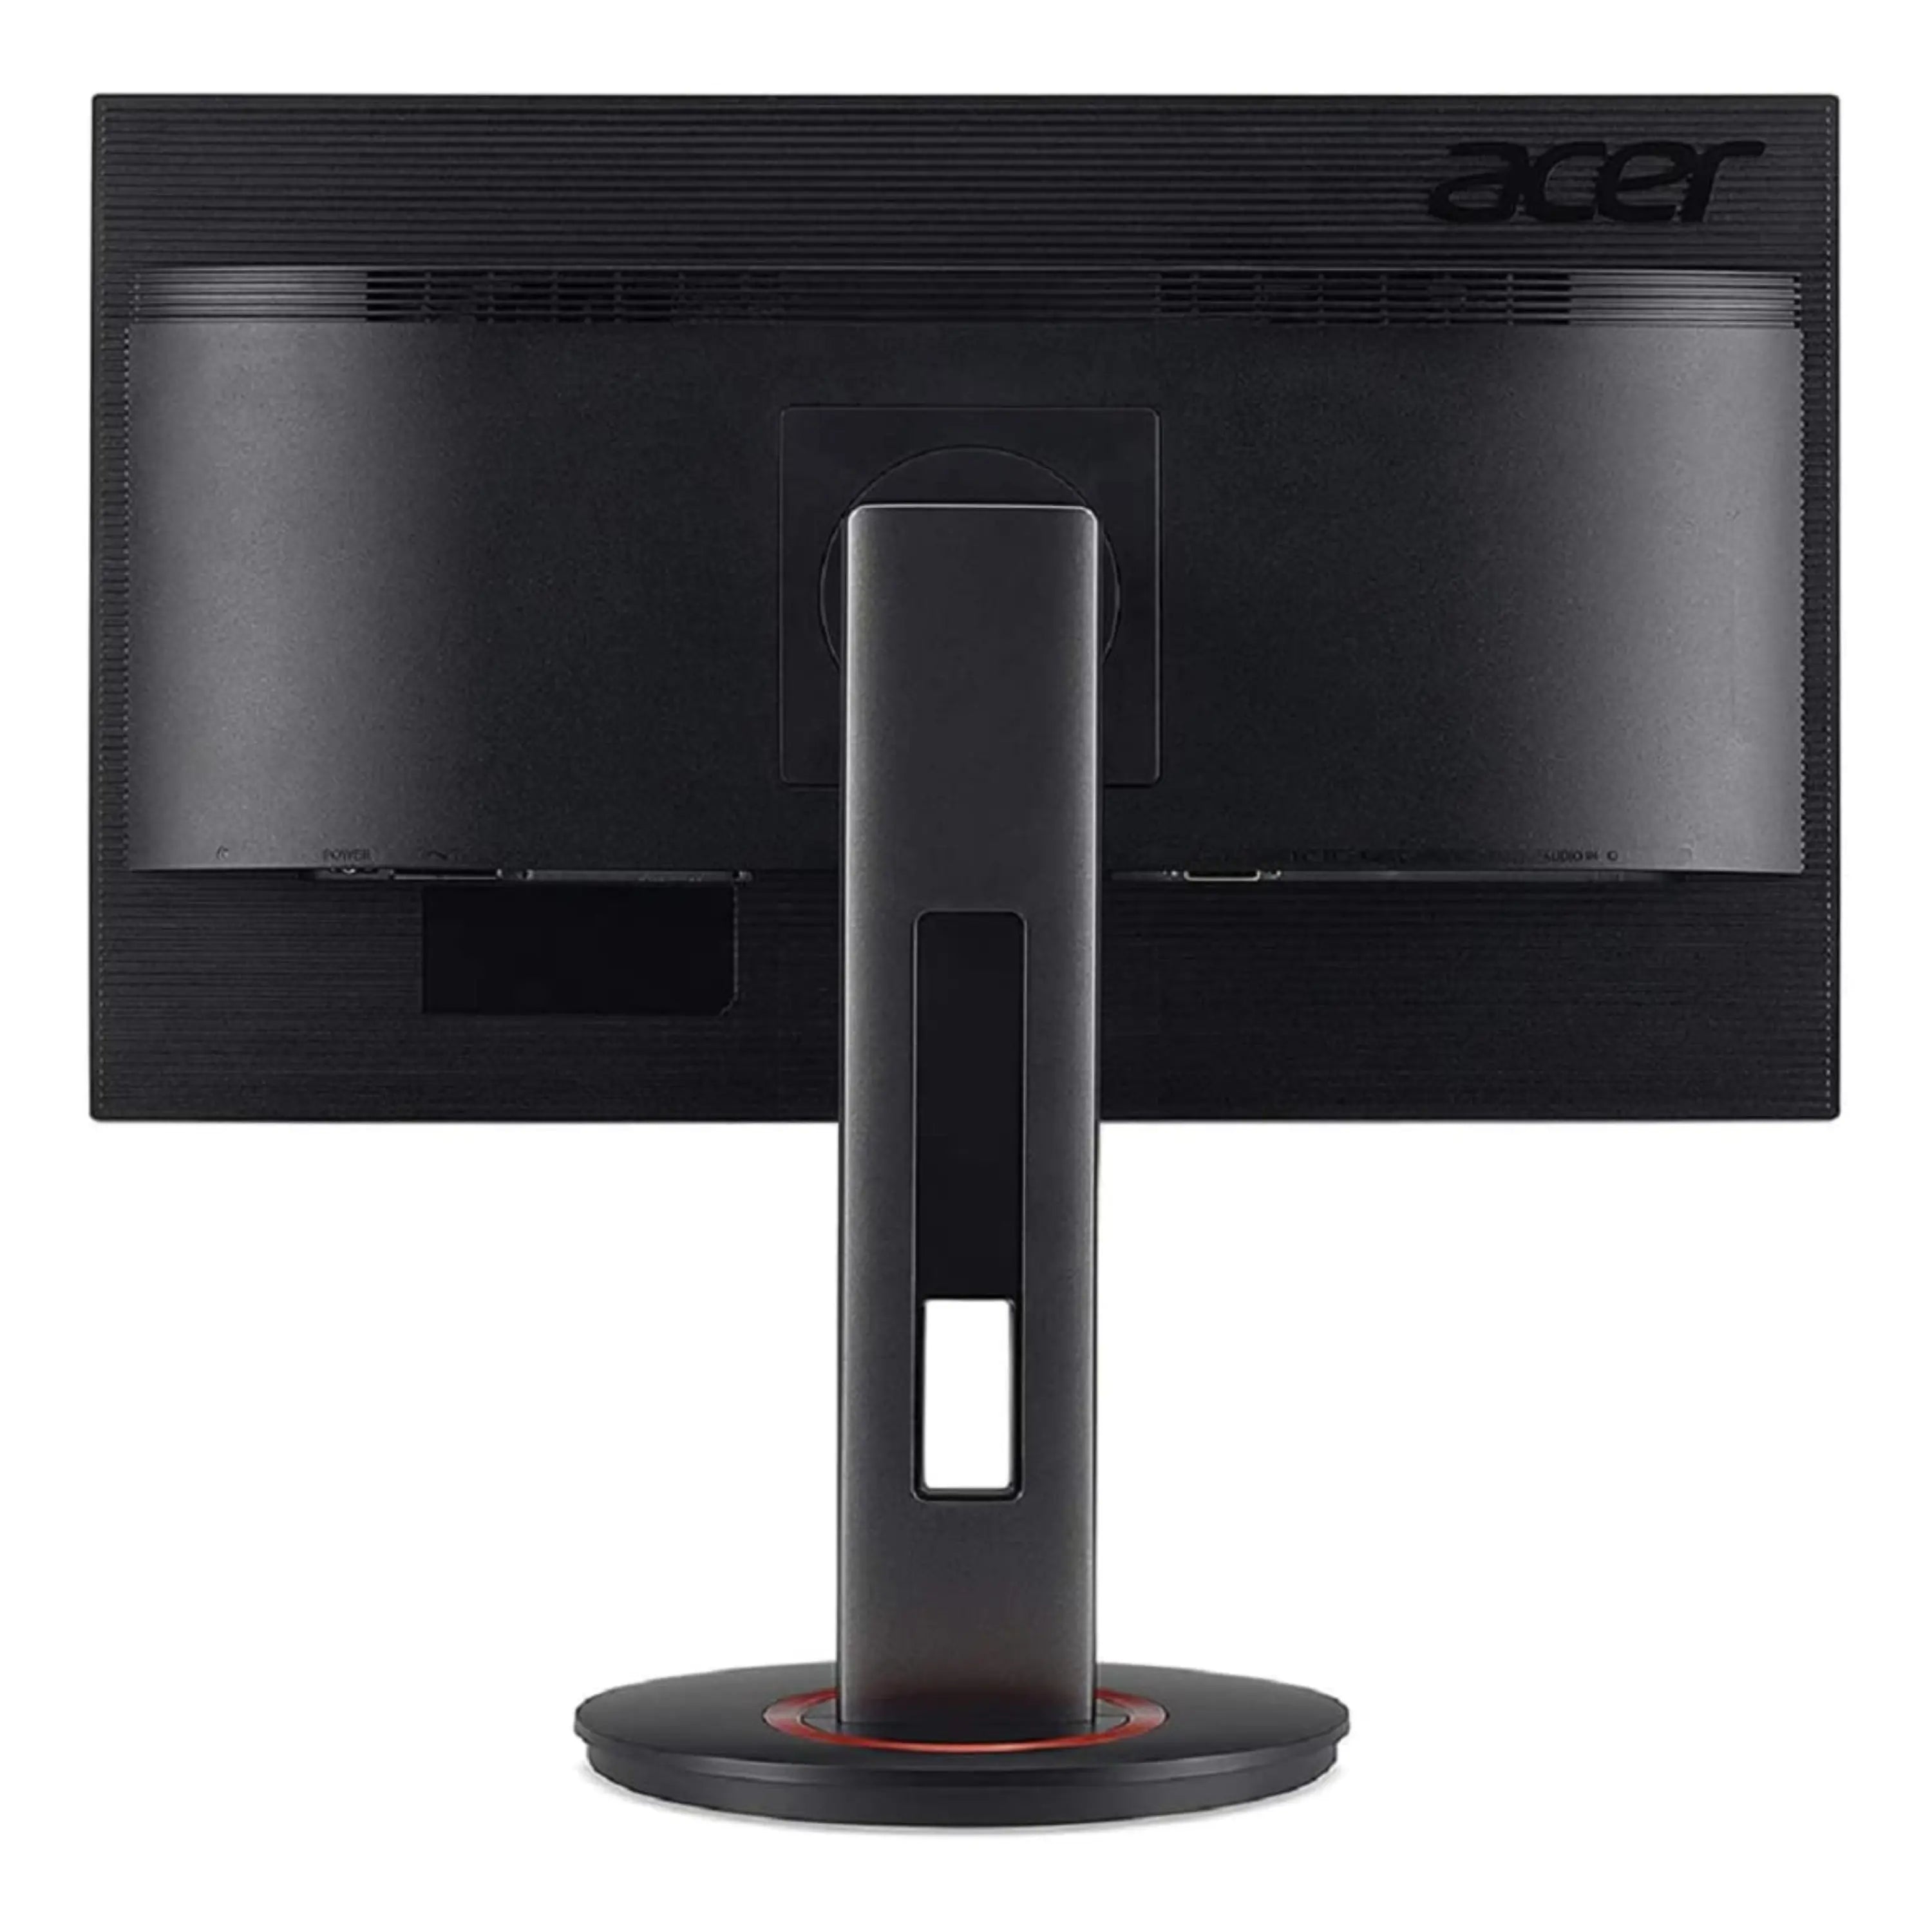 Monitor Gamer - Acer Gaming XFA240 bmjdpr 24" | Full HD 1920 x 1080 | 144hz | HDMI, DisplayPort, DVI - PC ONE MÉXICOACERMonitores